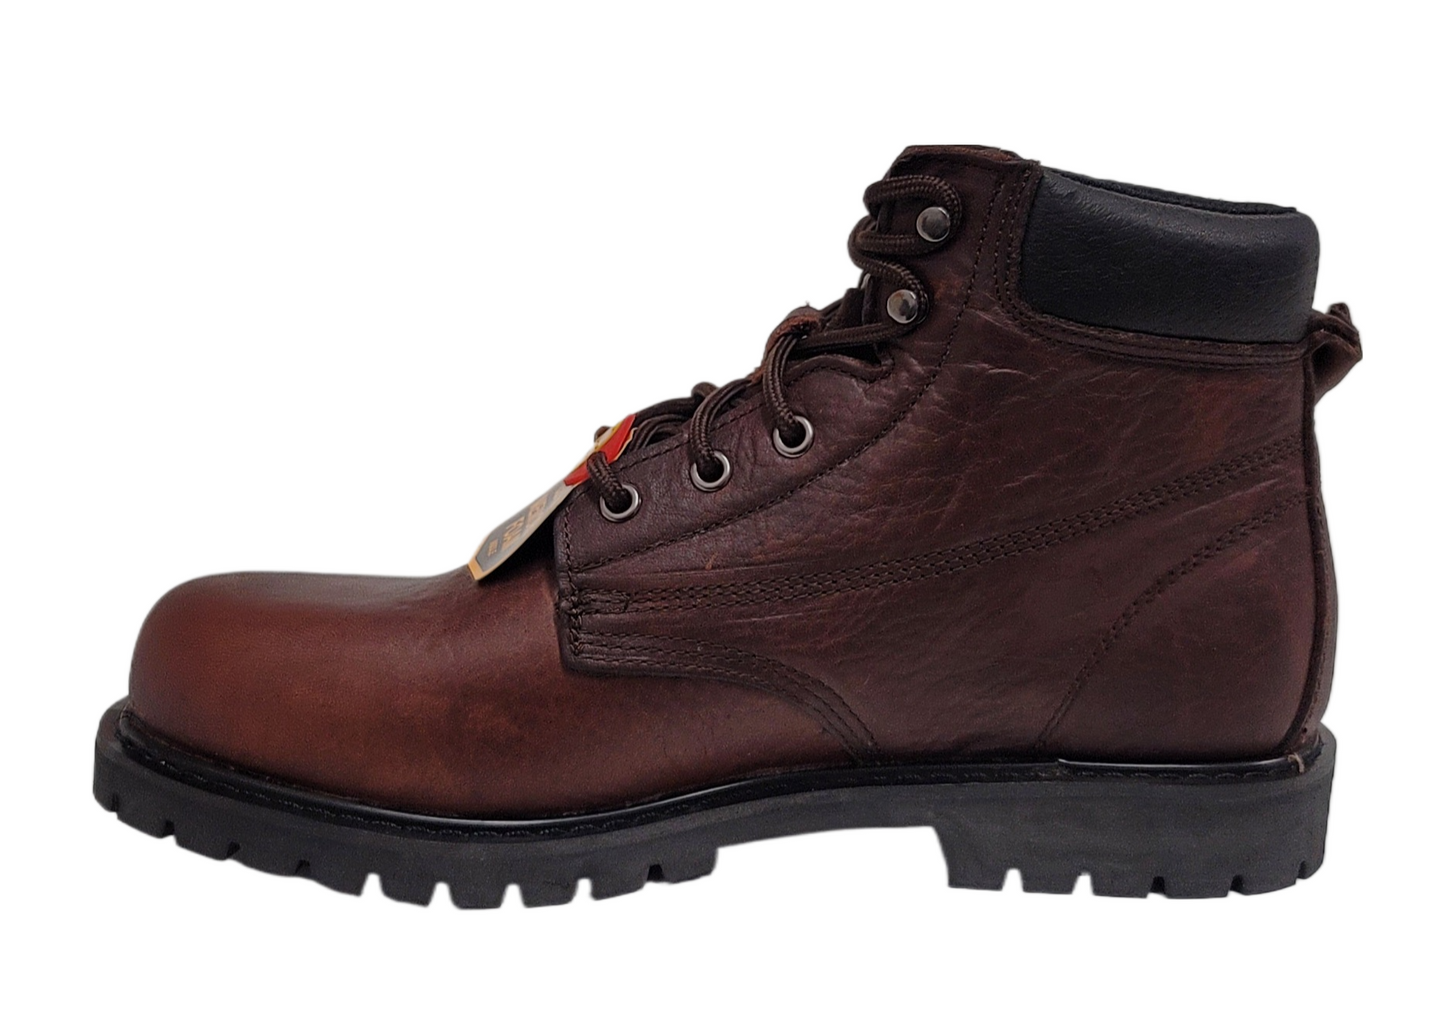 Cactus Men Leather Slip & Oil Resistant  Work Boot Dark Brown 6710-DK.BROWN